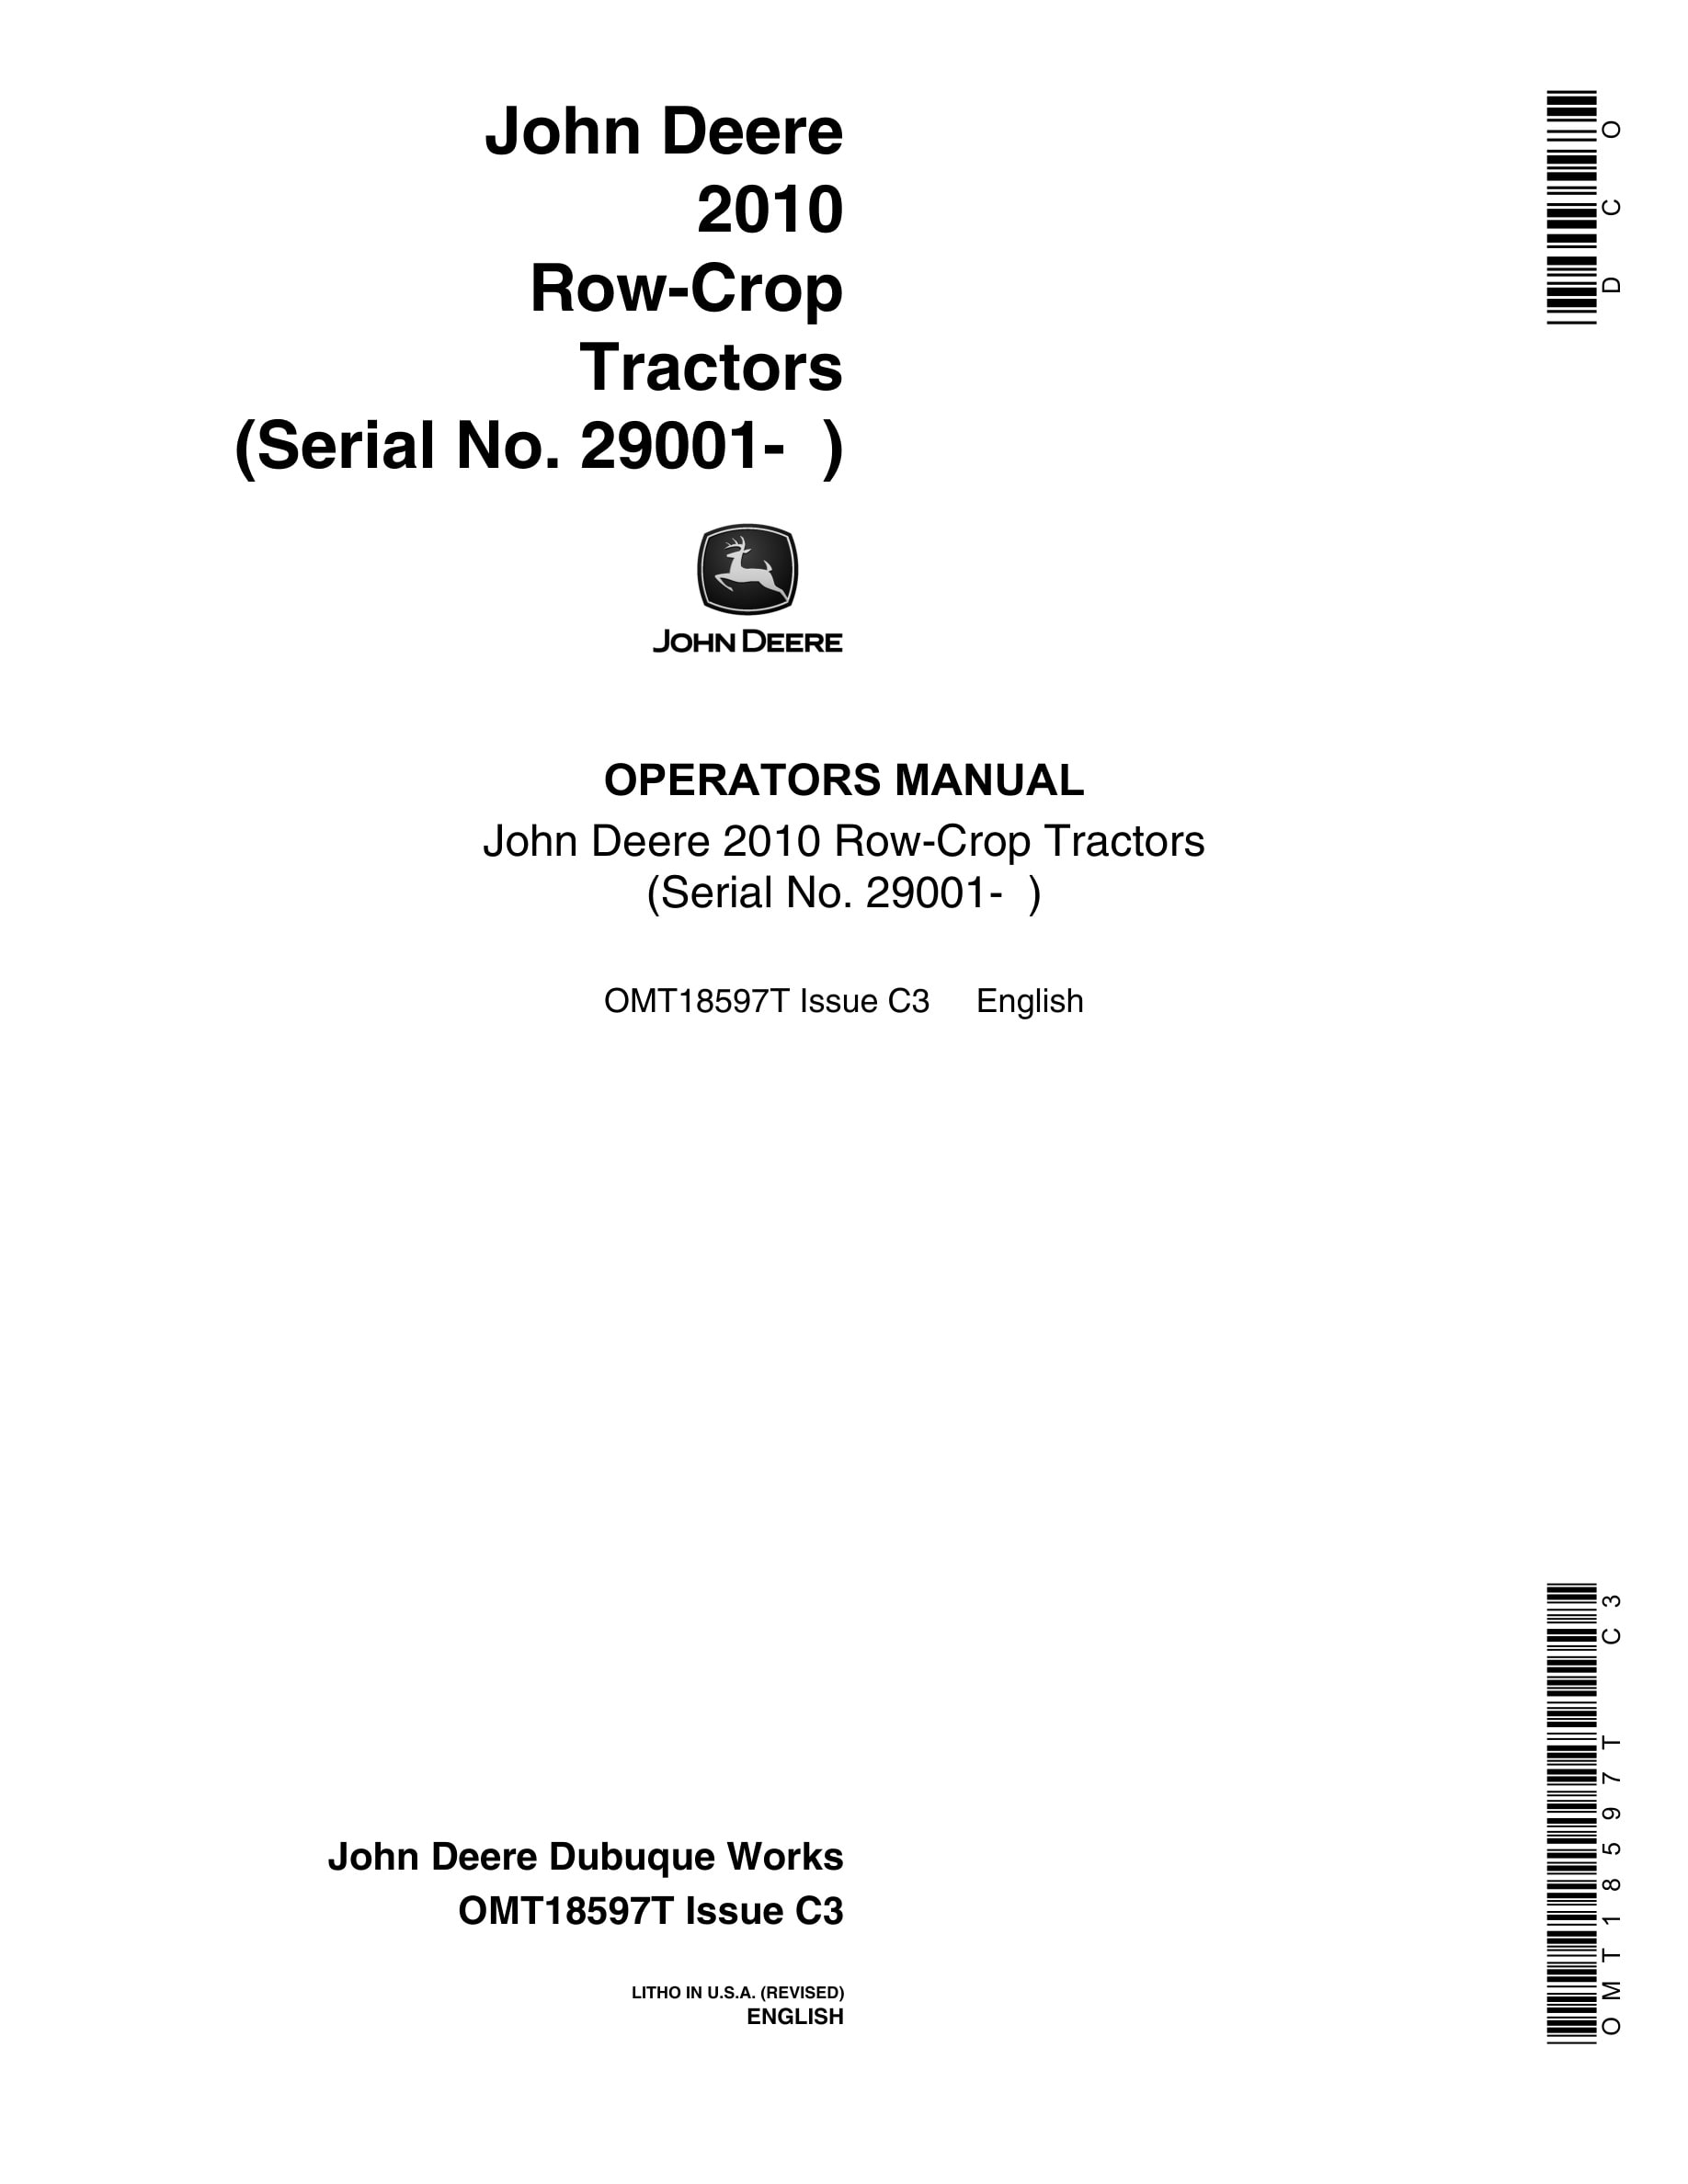 John Deere 2010 Tractor Operator Manual OMT18597T-1